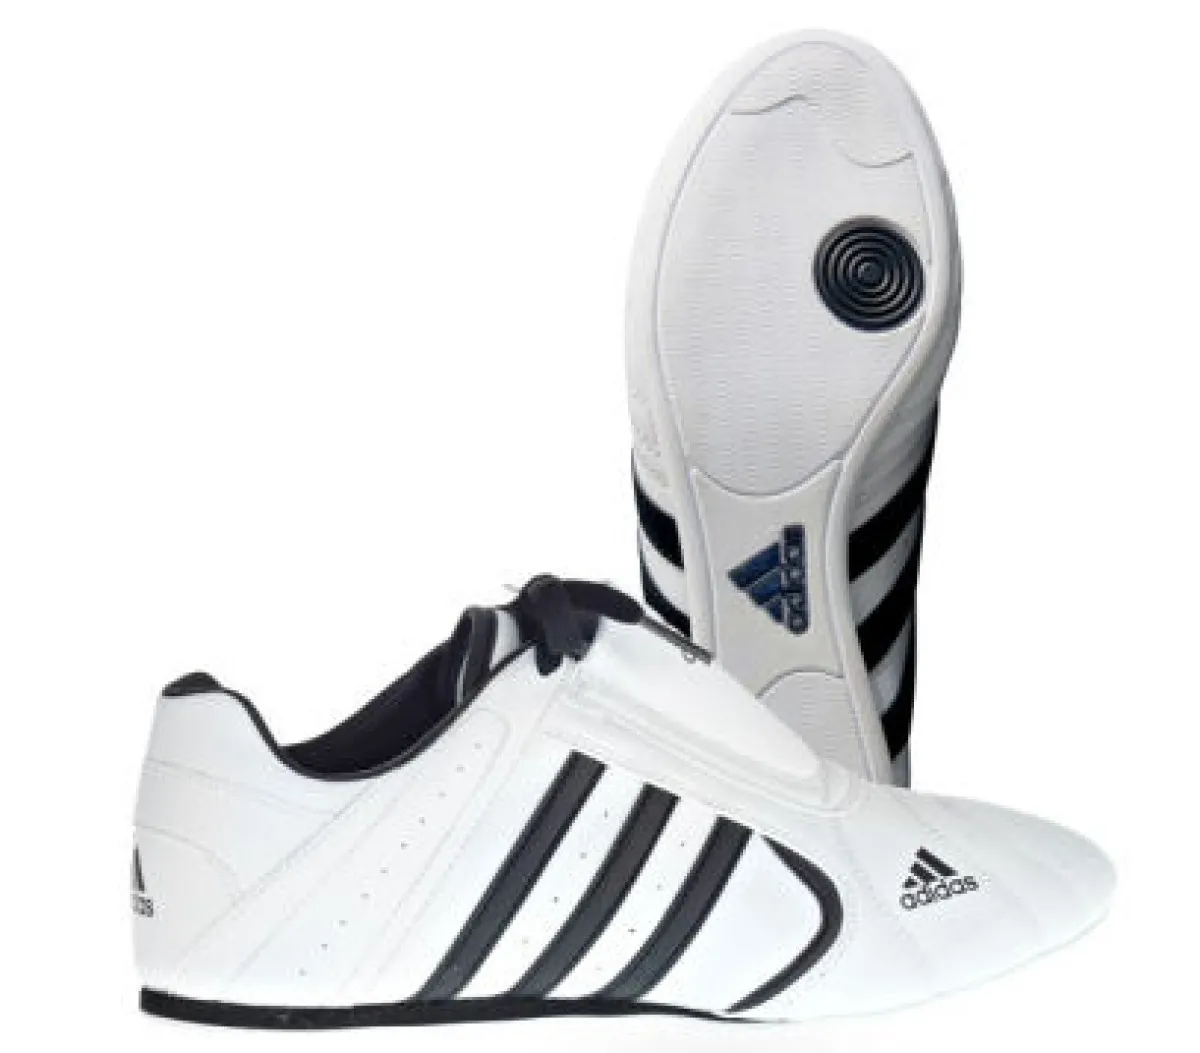 Adidas zapato SM III